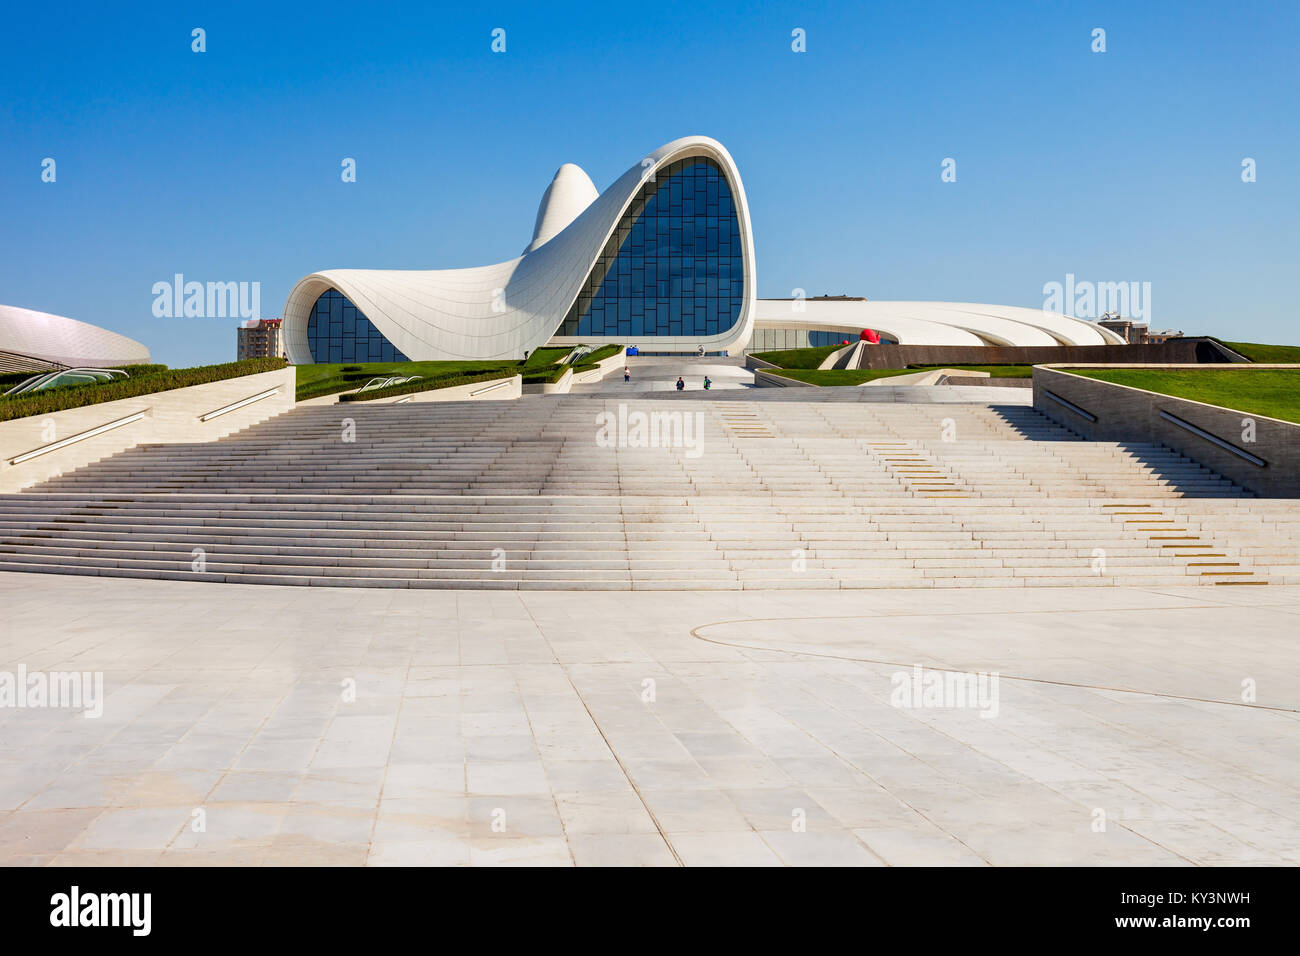 BAKU, AZERBAIJAN - SEPTEMBER 14, 2016: The Heydar Aliyev Center is a building complex in Baku, Azerbaijan designed by Zaha Hadid. Stock Photo